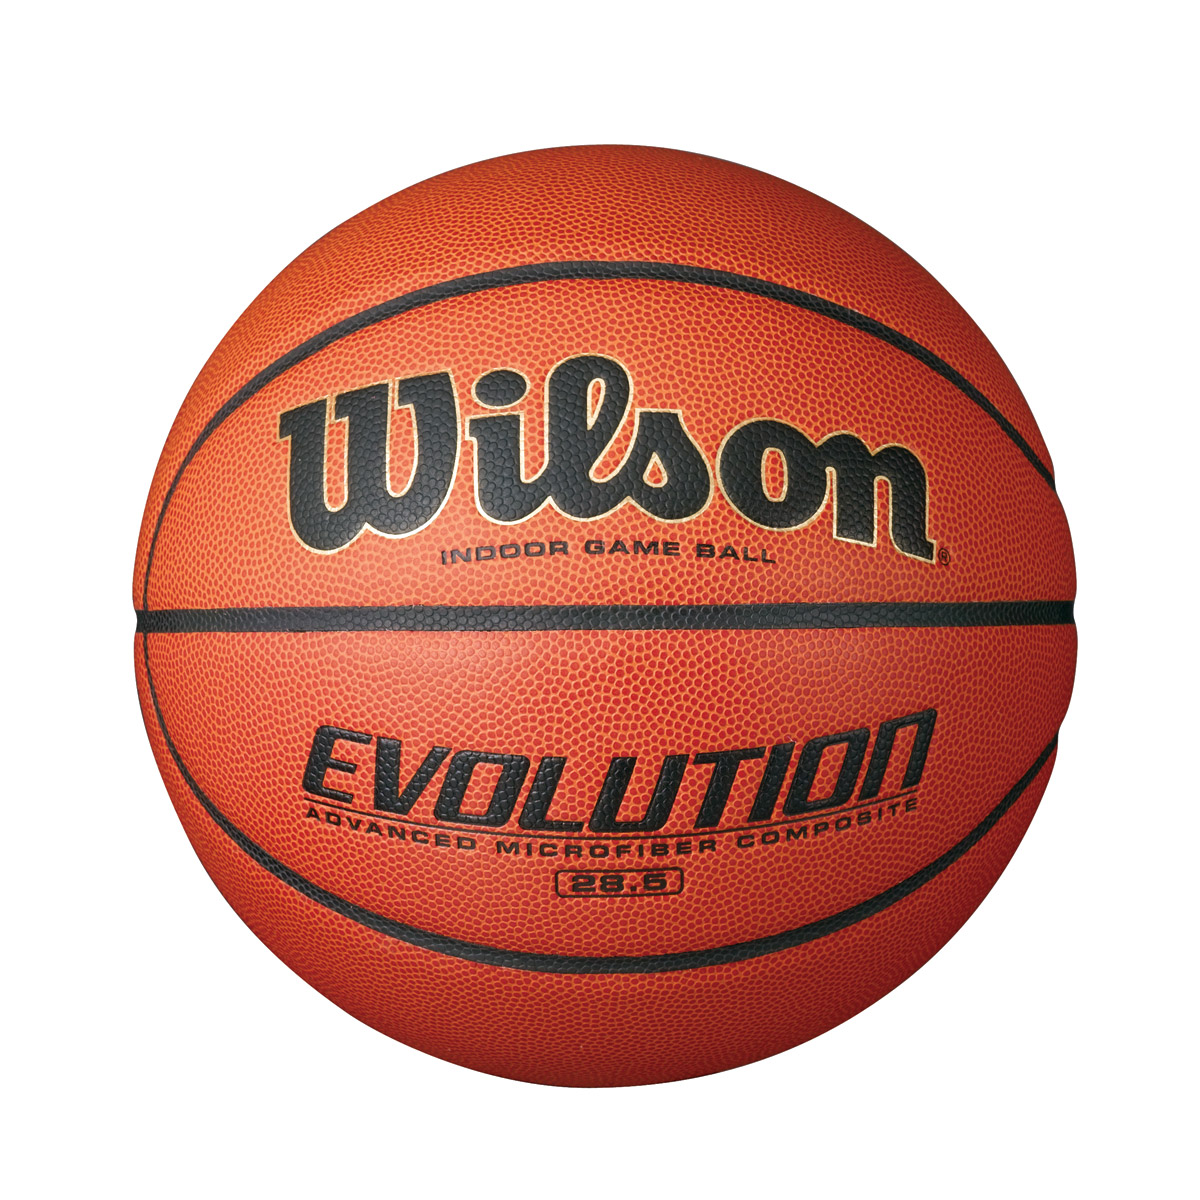 EVOLUTION GAME BASKETBALL - INTERMEDIATE SIZE (28.5 IN) | Wilson ...